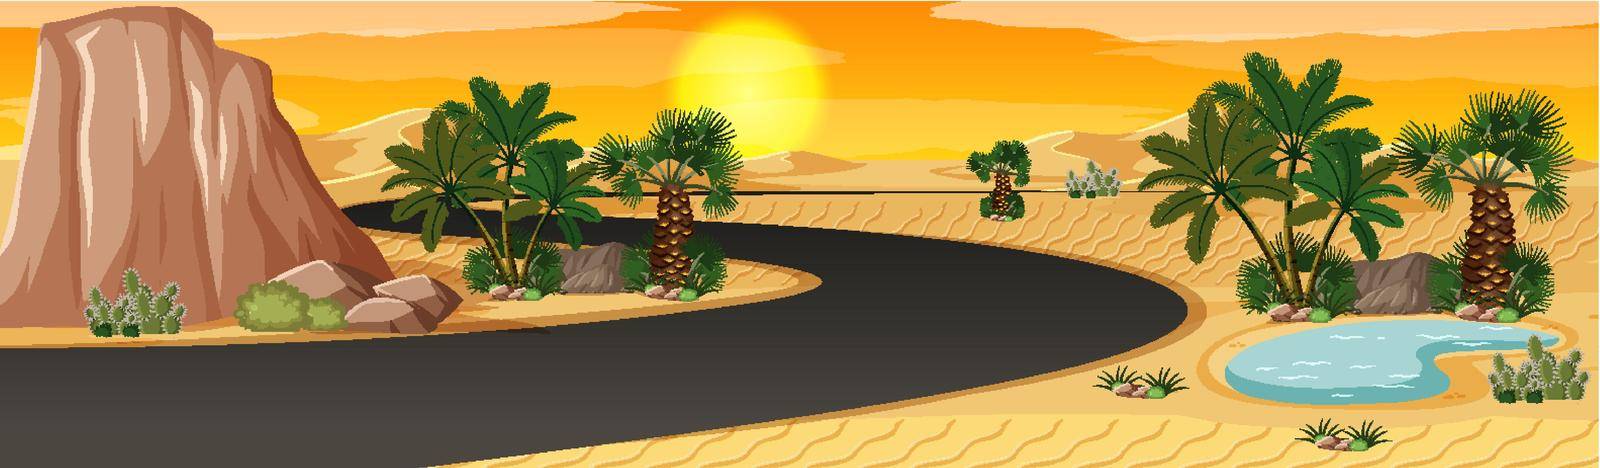 Desert oasis with palms nature landscape scene illustration